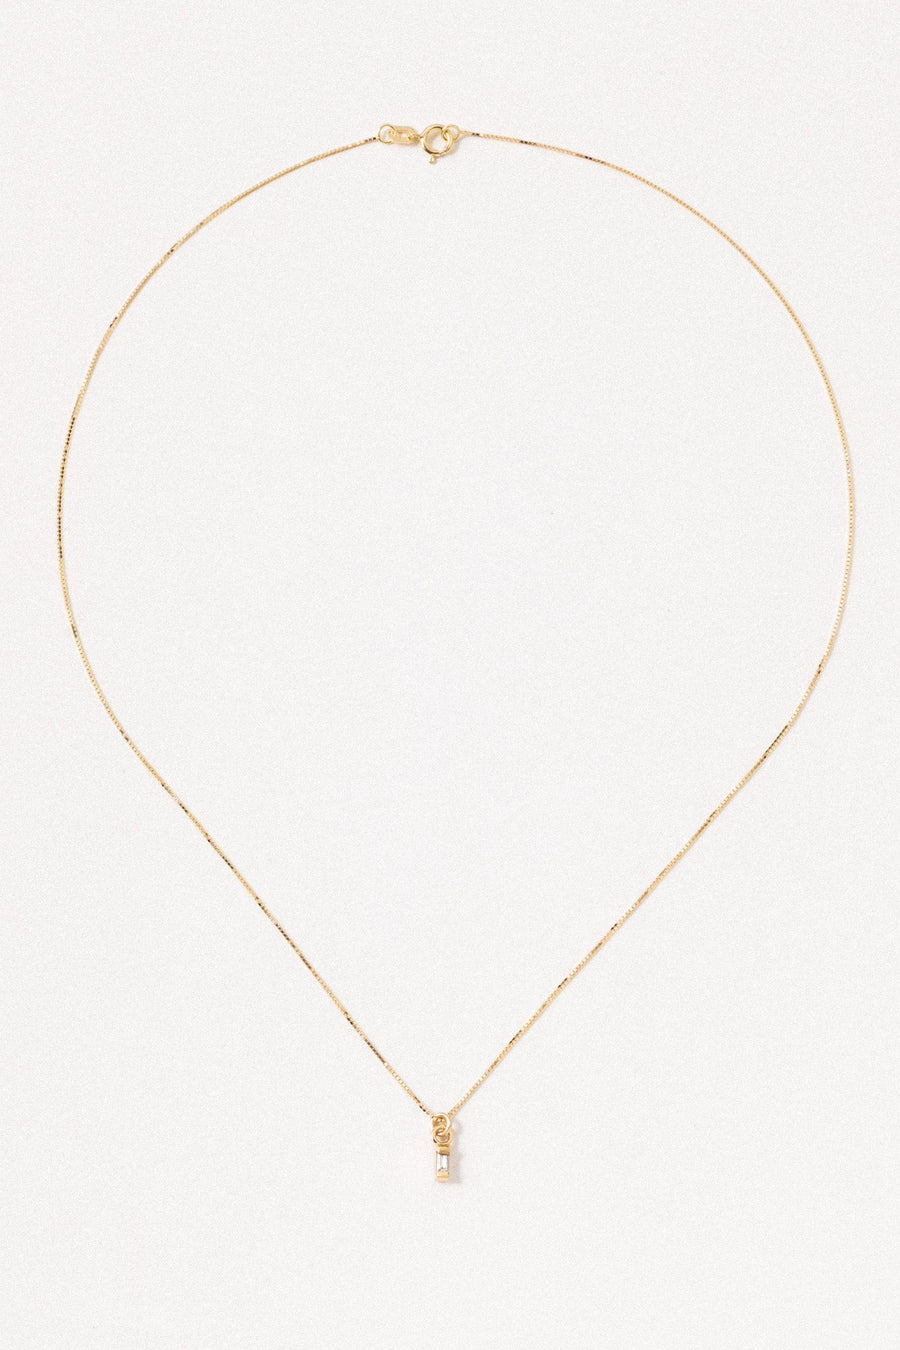 Stuller Jewelry Gold / 16 Inches 14kt Khalo Single Diamond Necklace